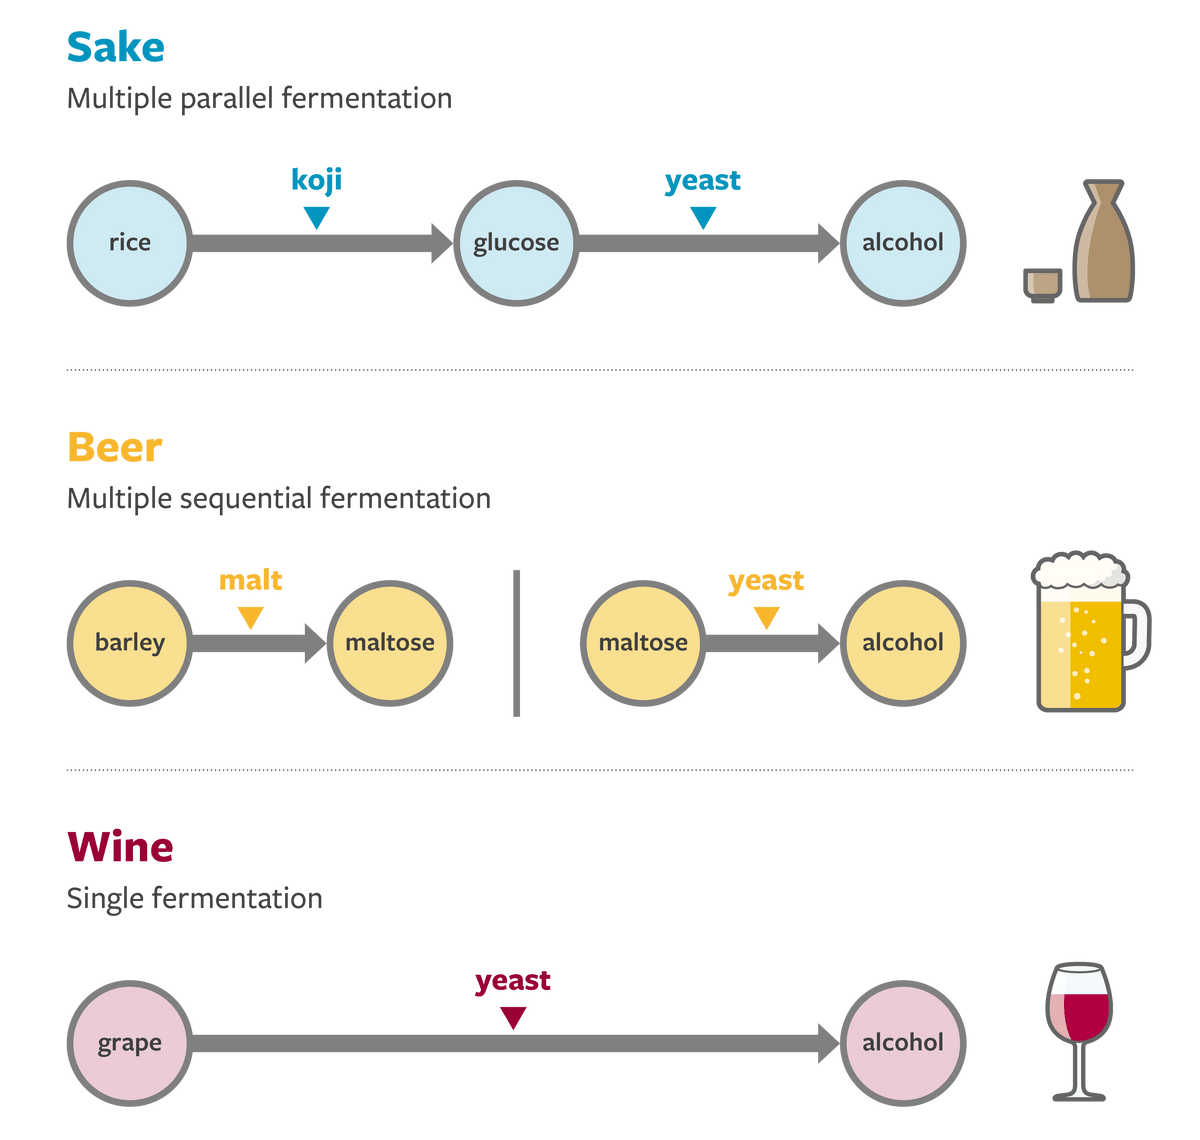 Fermentation processes of sake, beer and wine